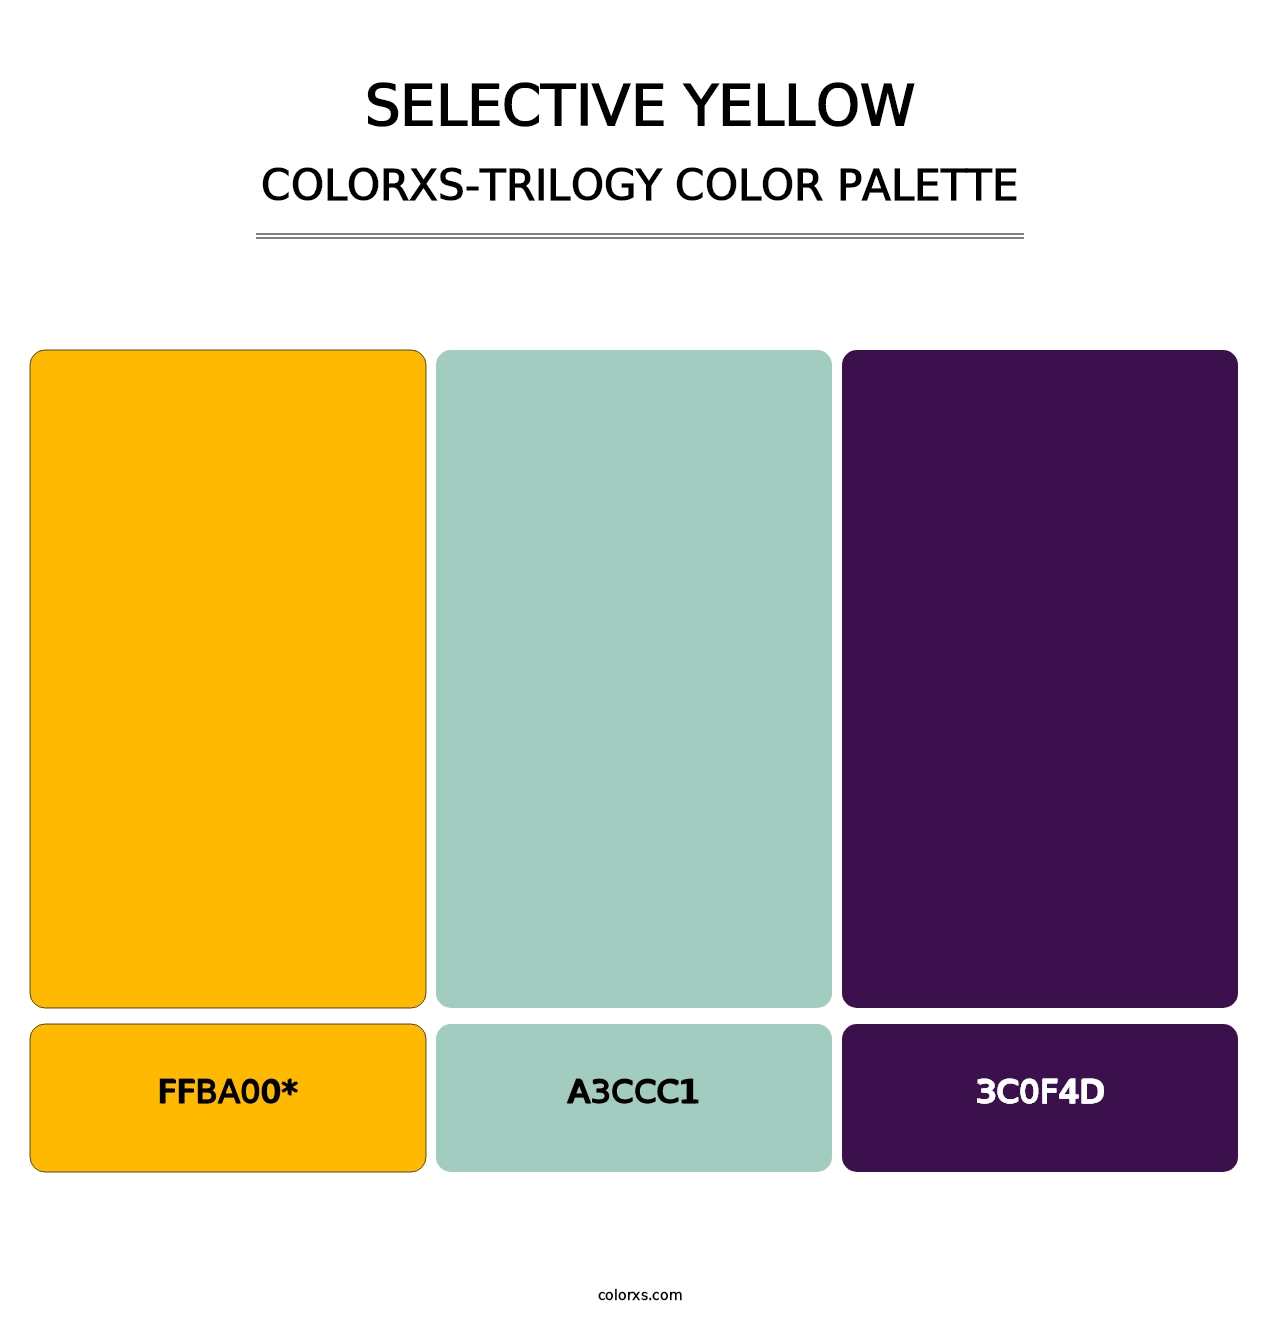 Selective yellow - Colorxs Trilogy Palette